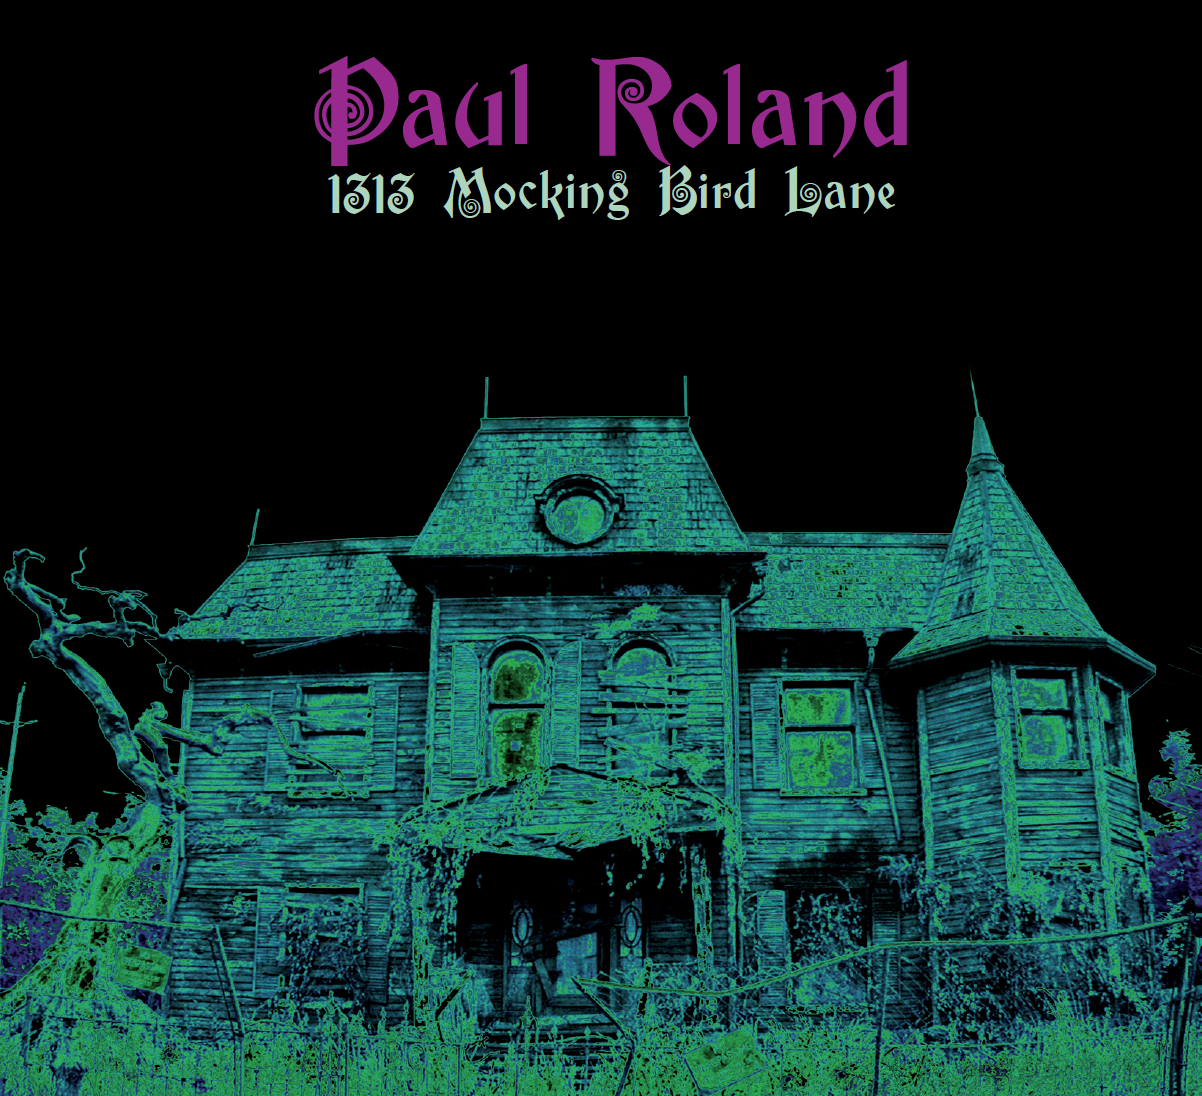 Paul Roland - 1313 Mocking Bird Lane CD